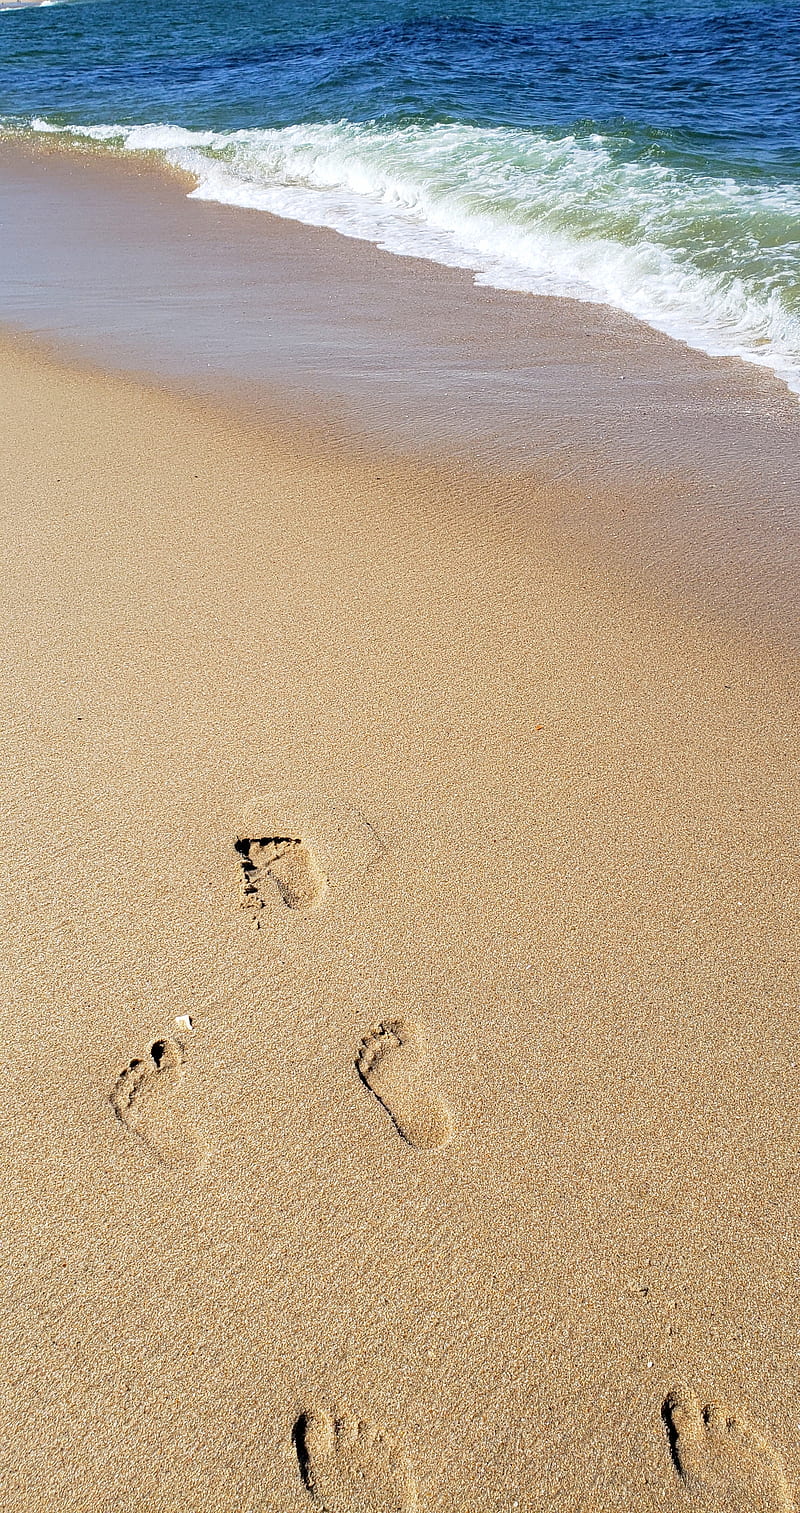 1920x1080px, 1080P free download | Footprints, beach, beaches, foot ...